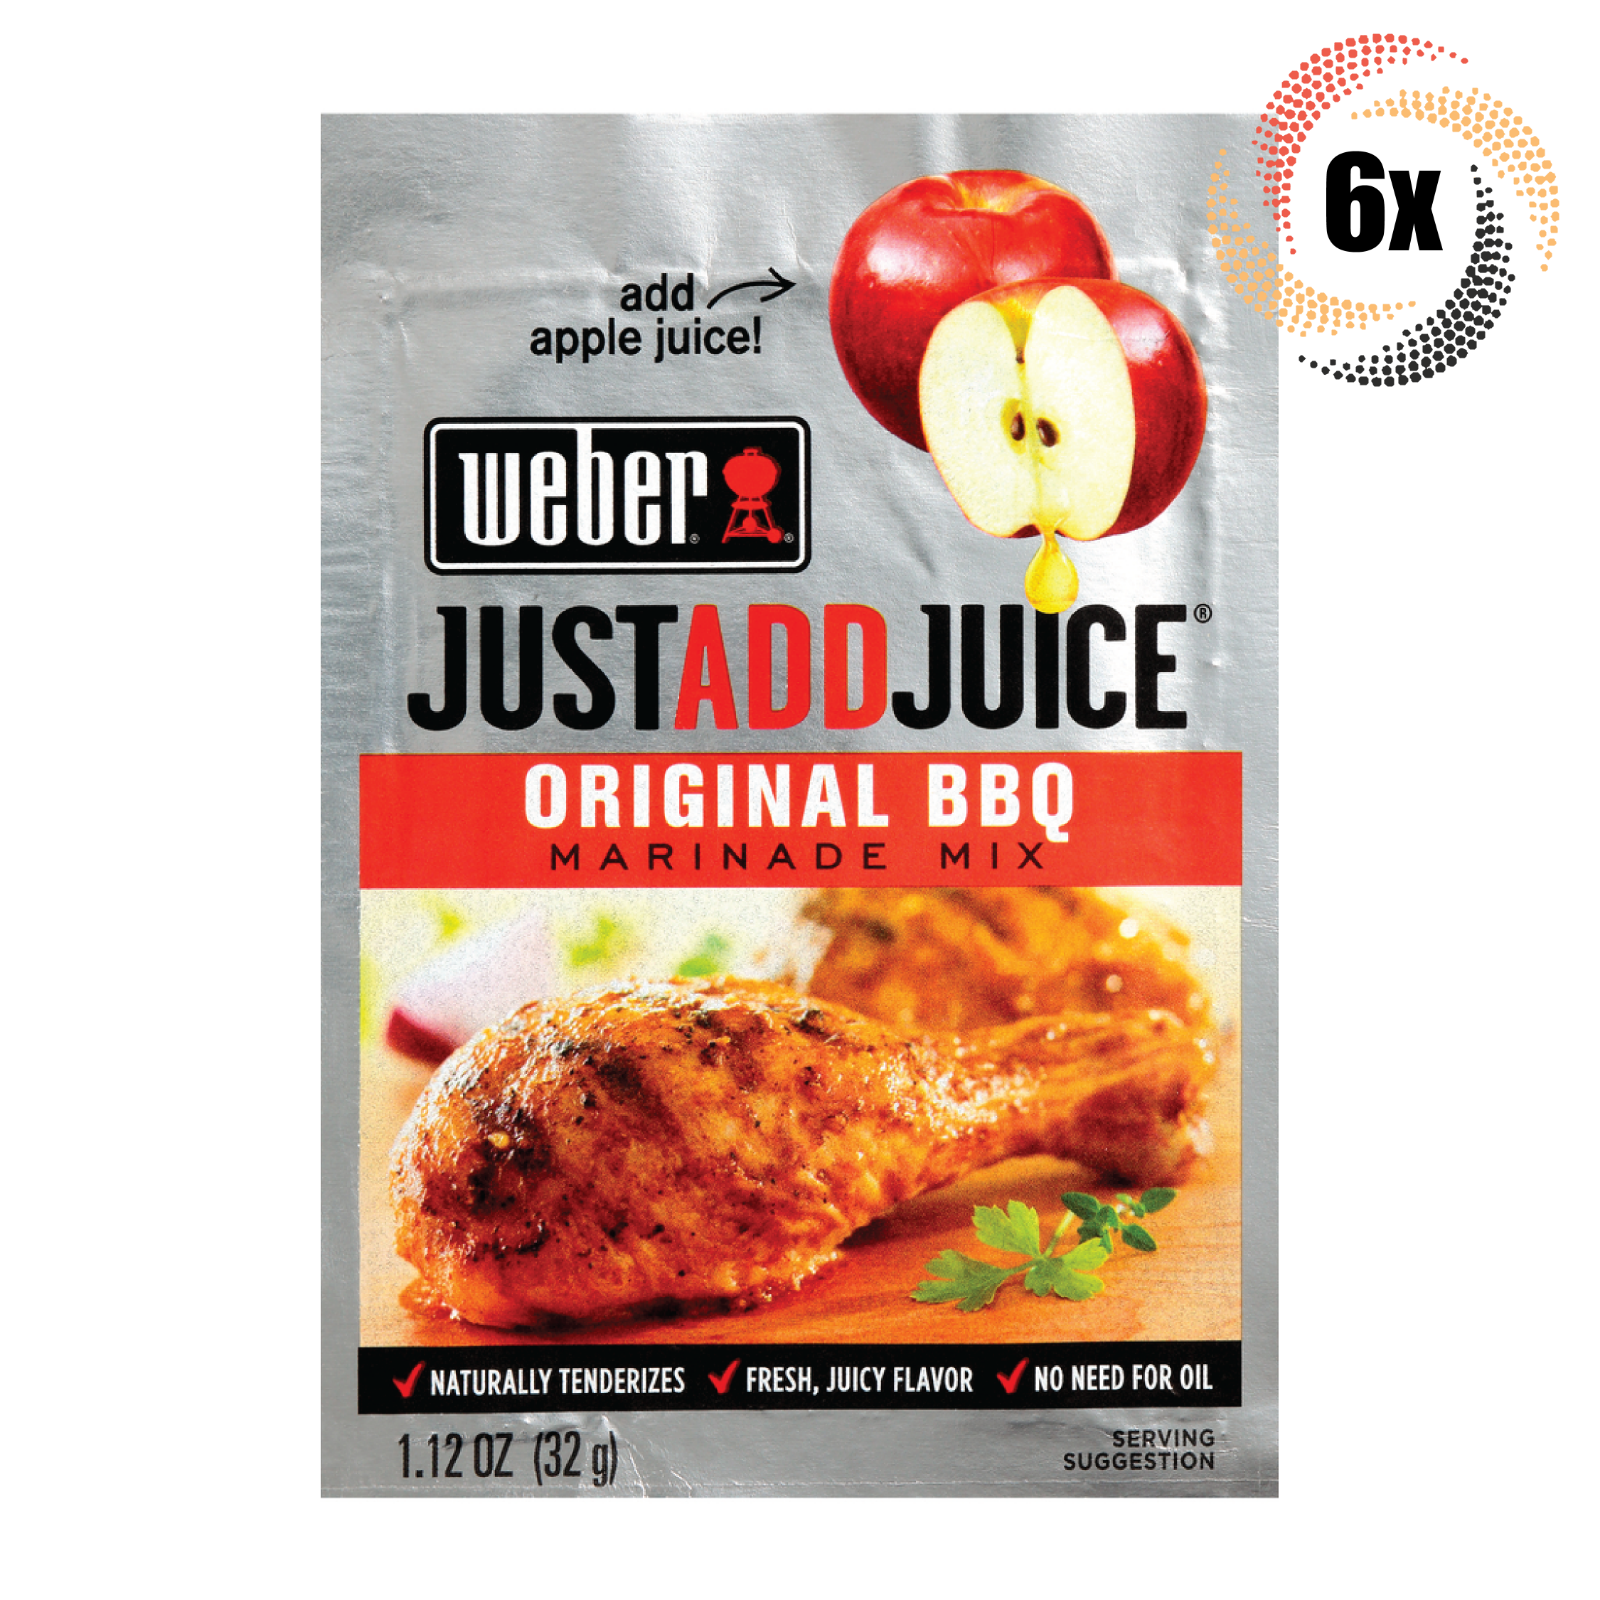 6x Packets Weber Just Add Juice Original BBQ Marinade Mix 1.12oz | Fast Shipping - $16.04